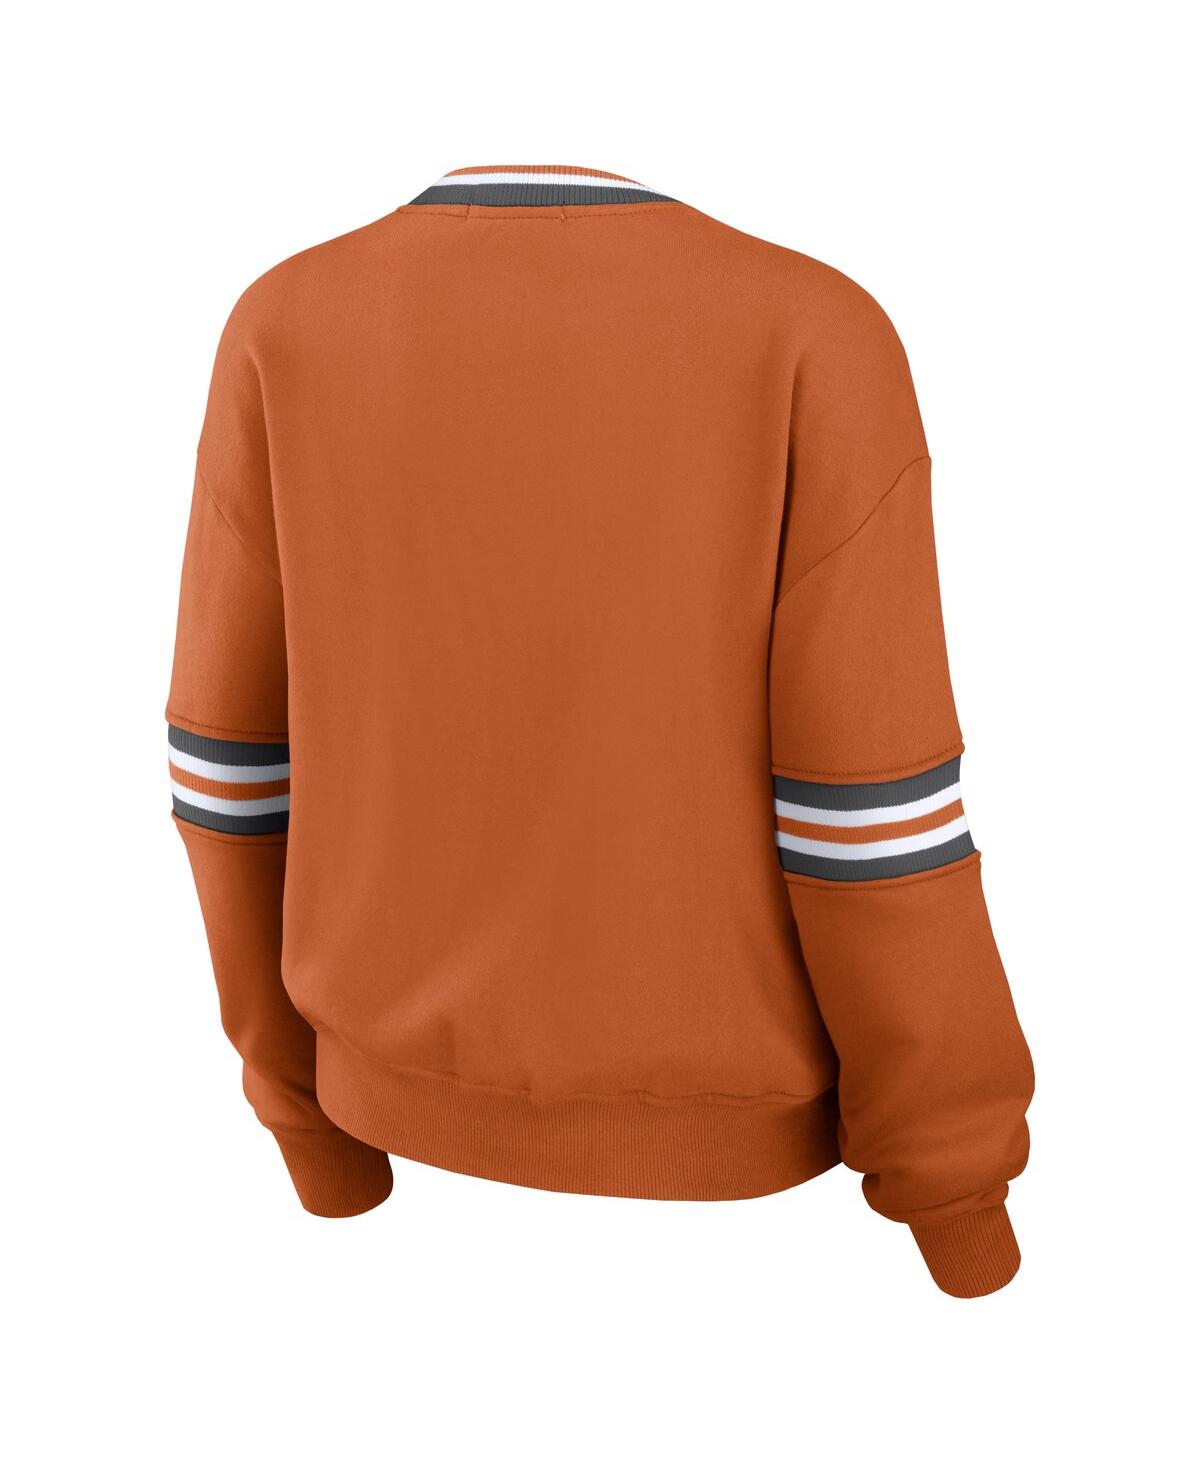 Shop Wear By Erin Andrews Women's  Orange Distressed Texas Longhorns Vintage-like Pullover Sweatshirt